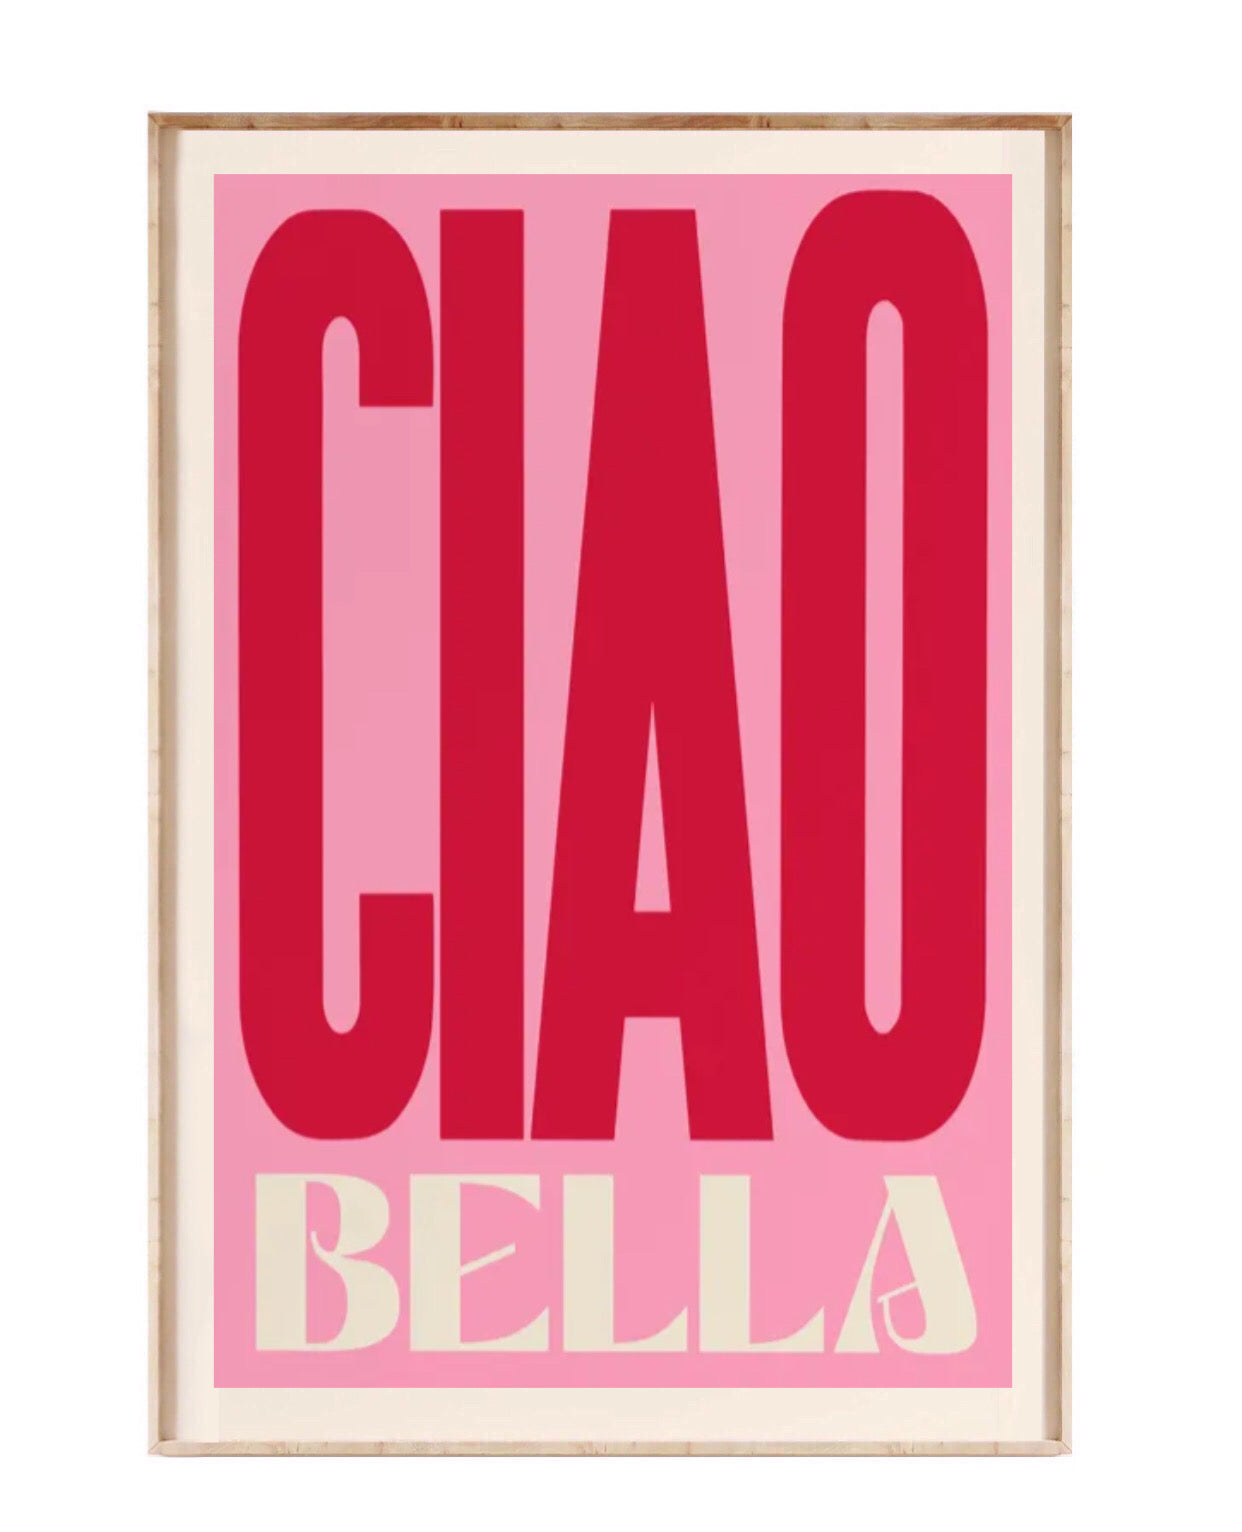 "ciao bella " poster